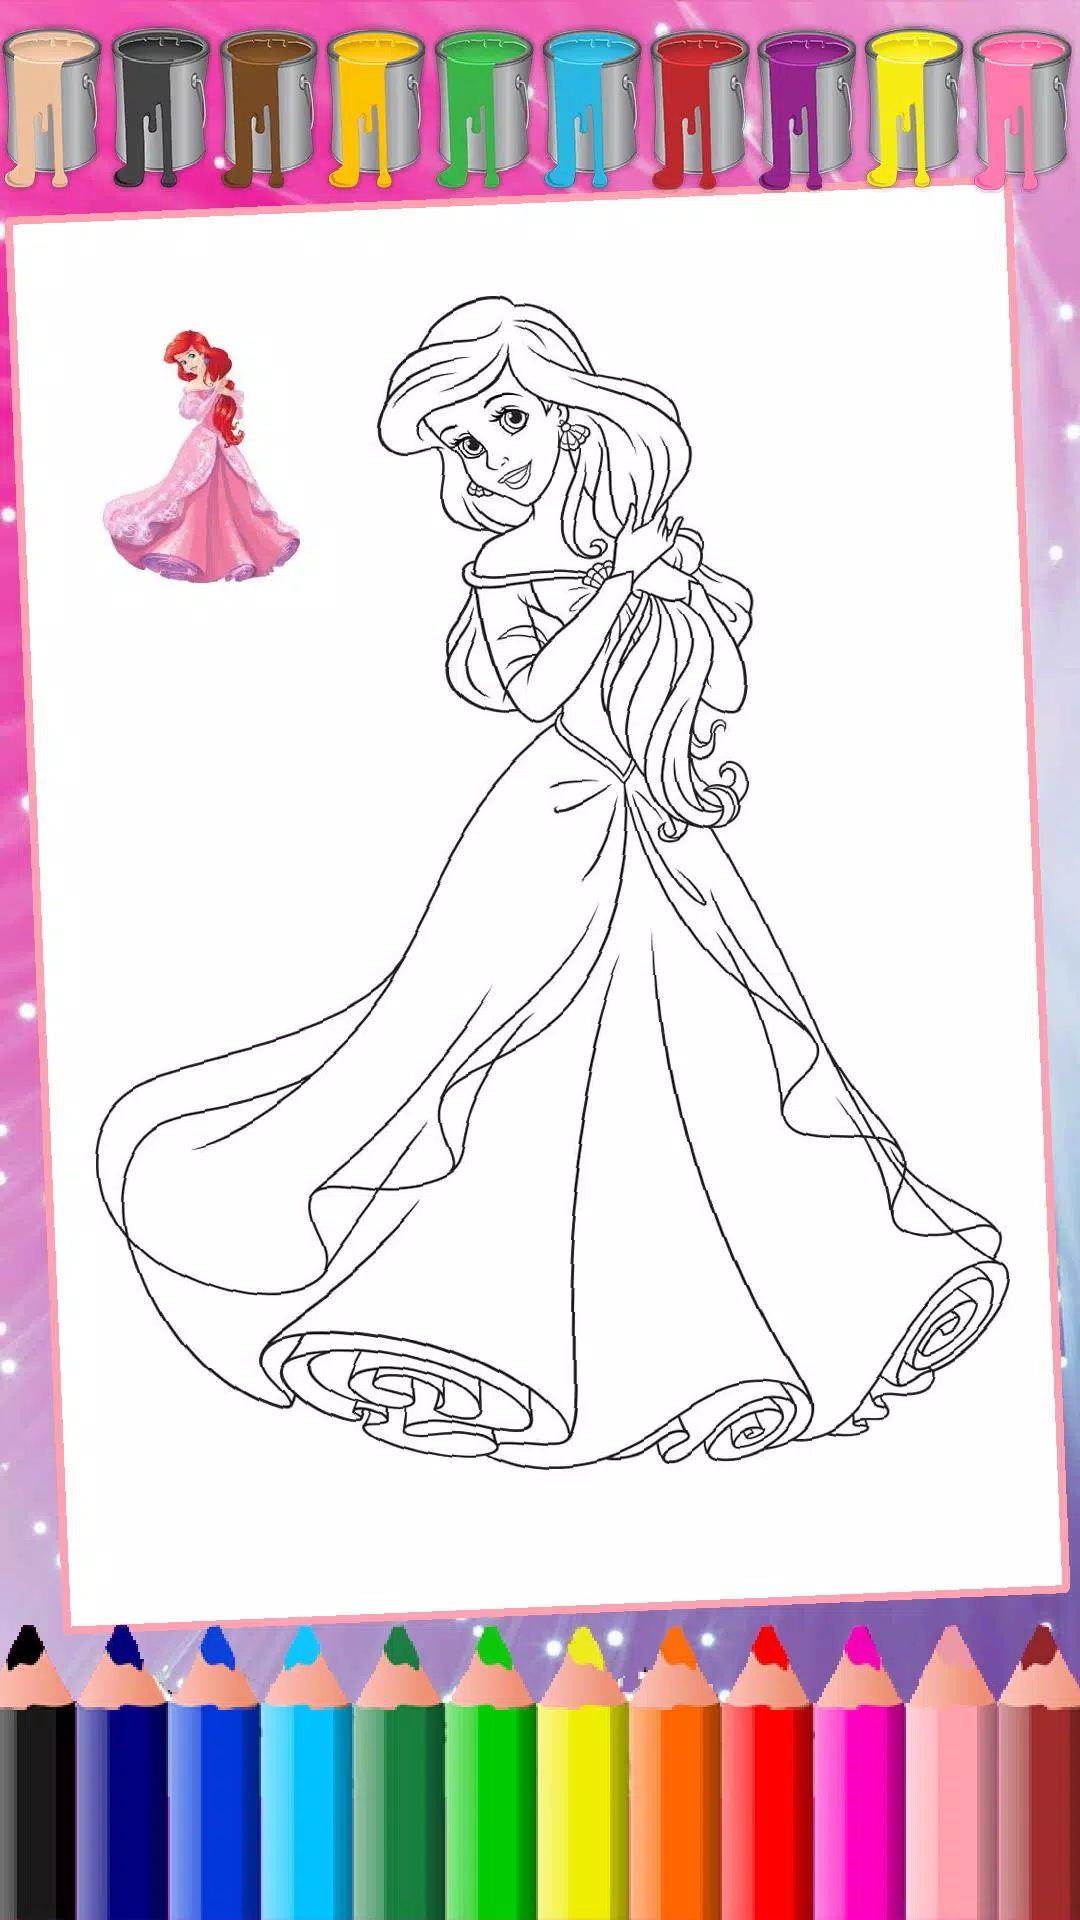 Download do APK de Jogo de colorir princesa para Android